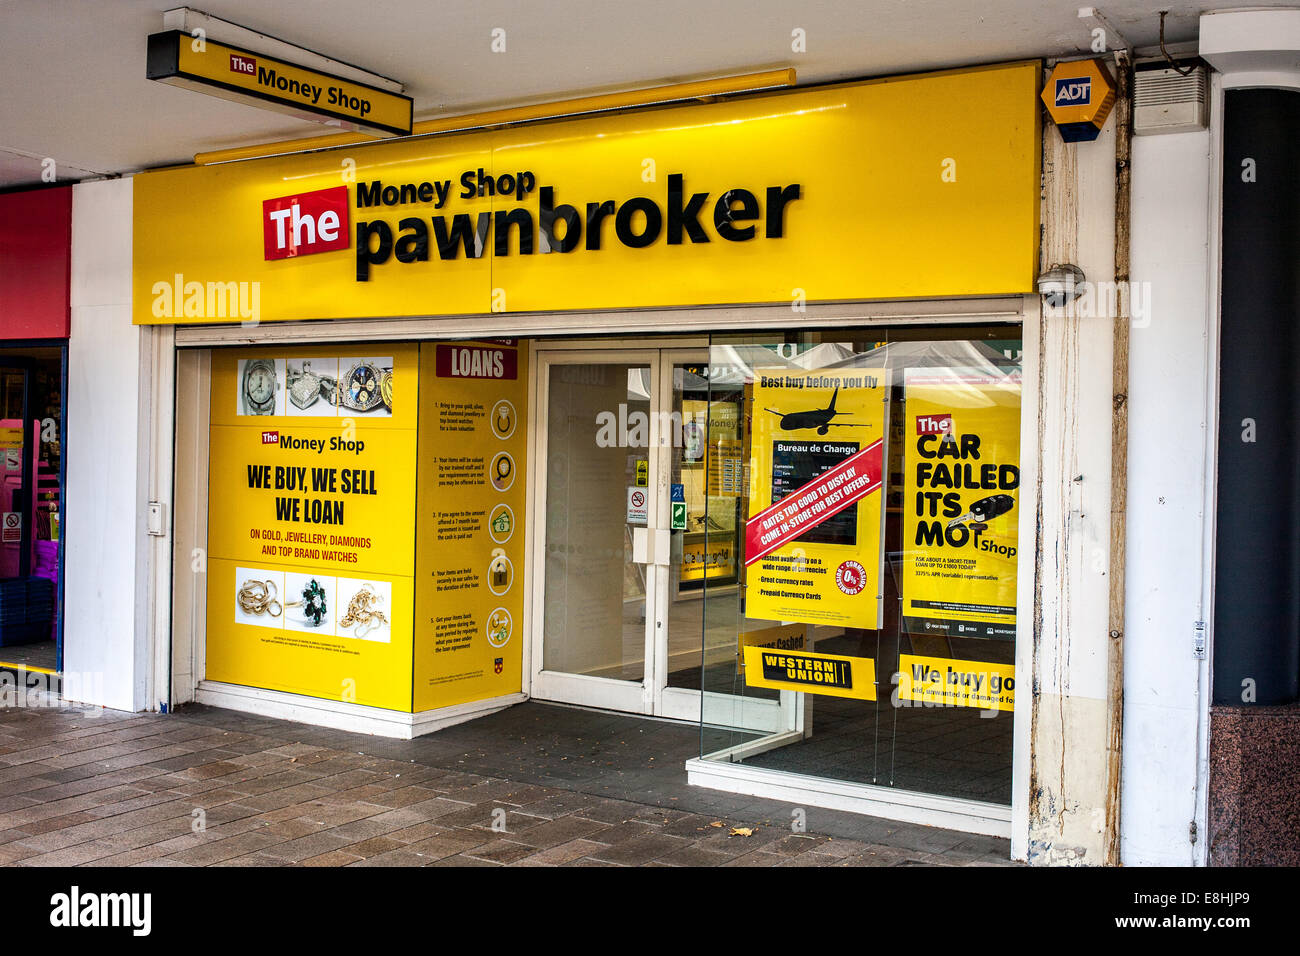 The Money Shop Pawnbroker in Sheffield UK Stock Photo